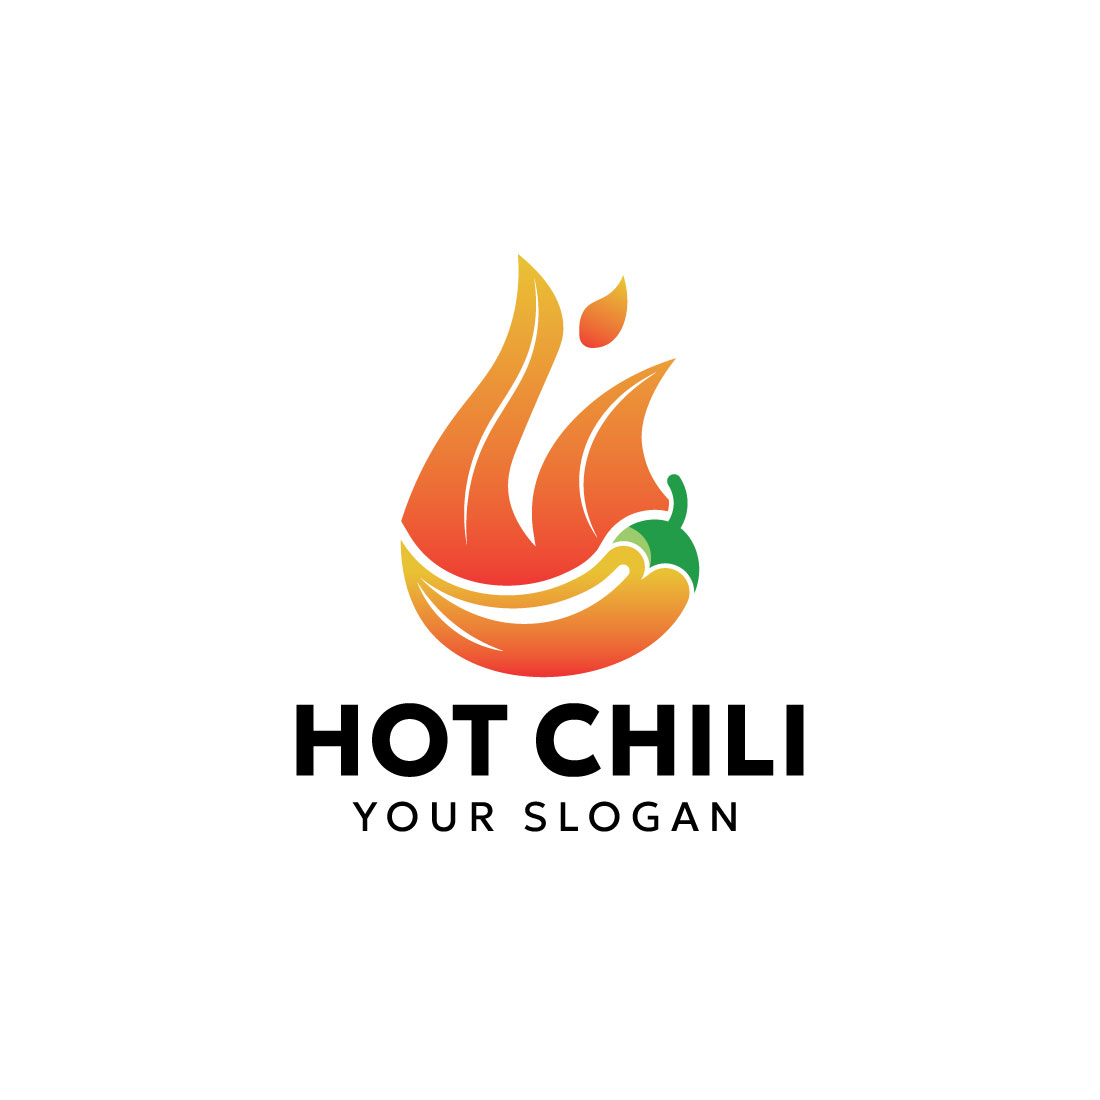 Hot chili fire logo design preview image.